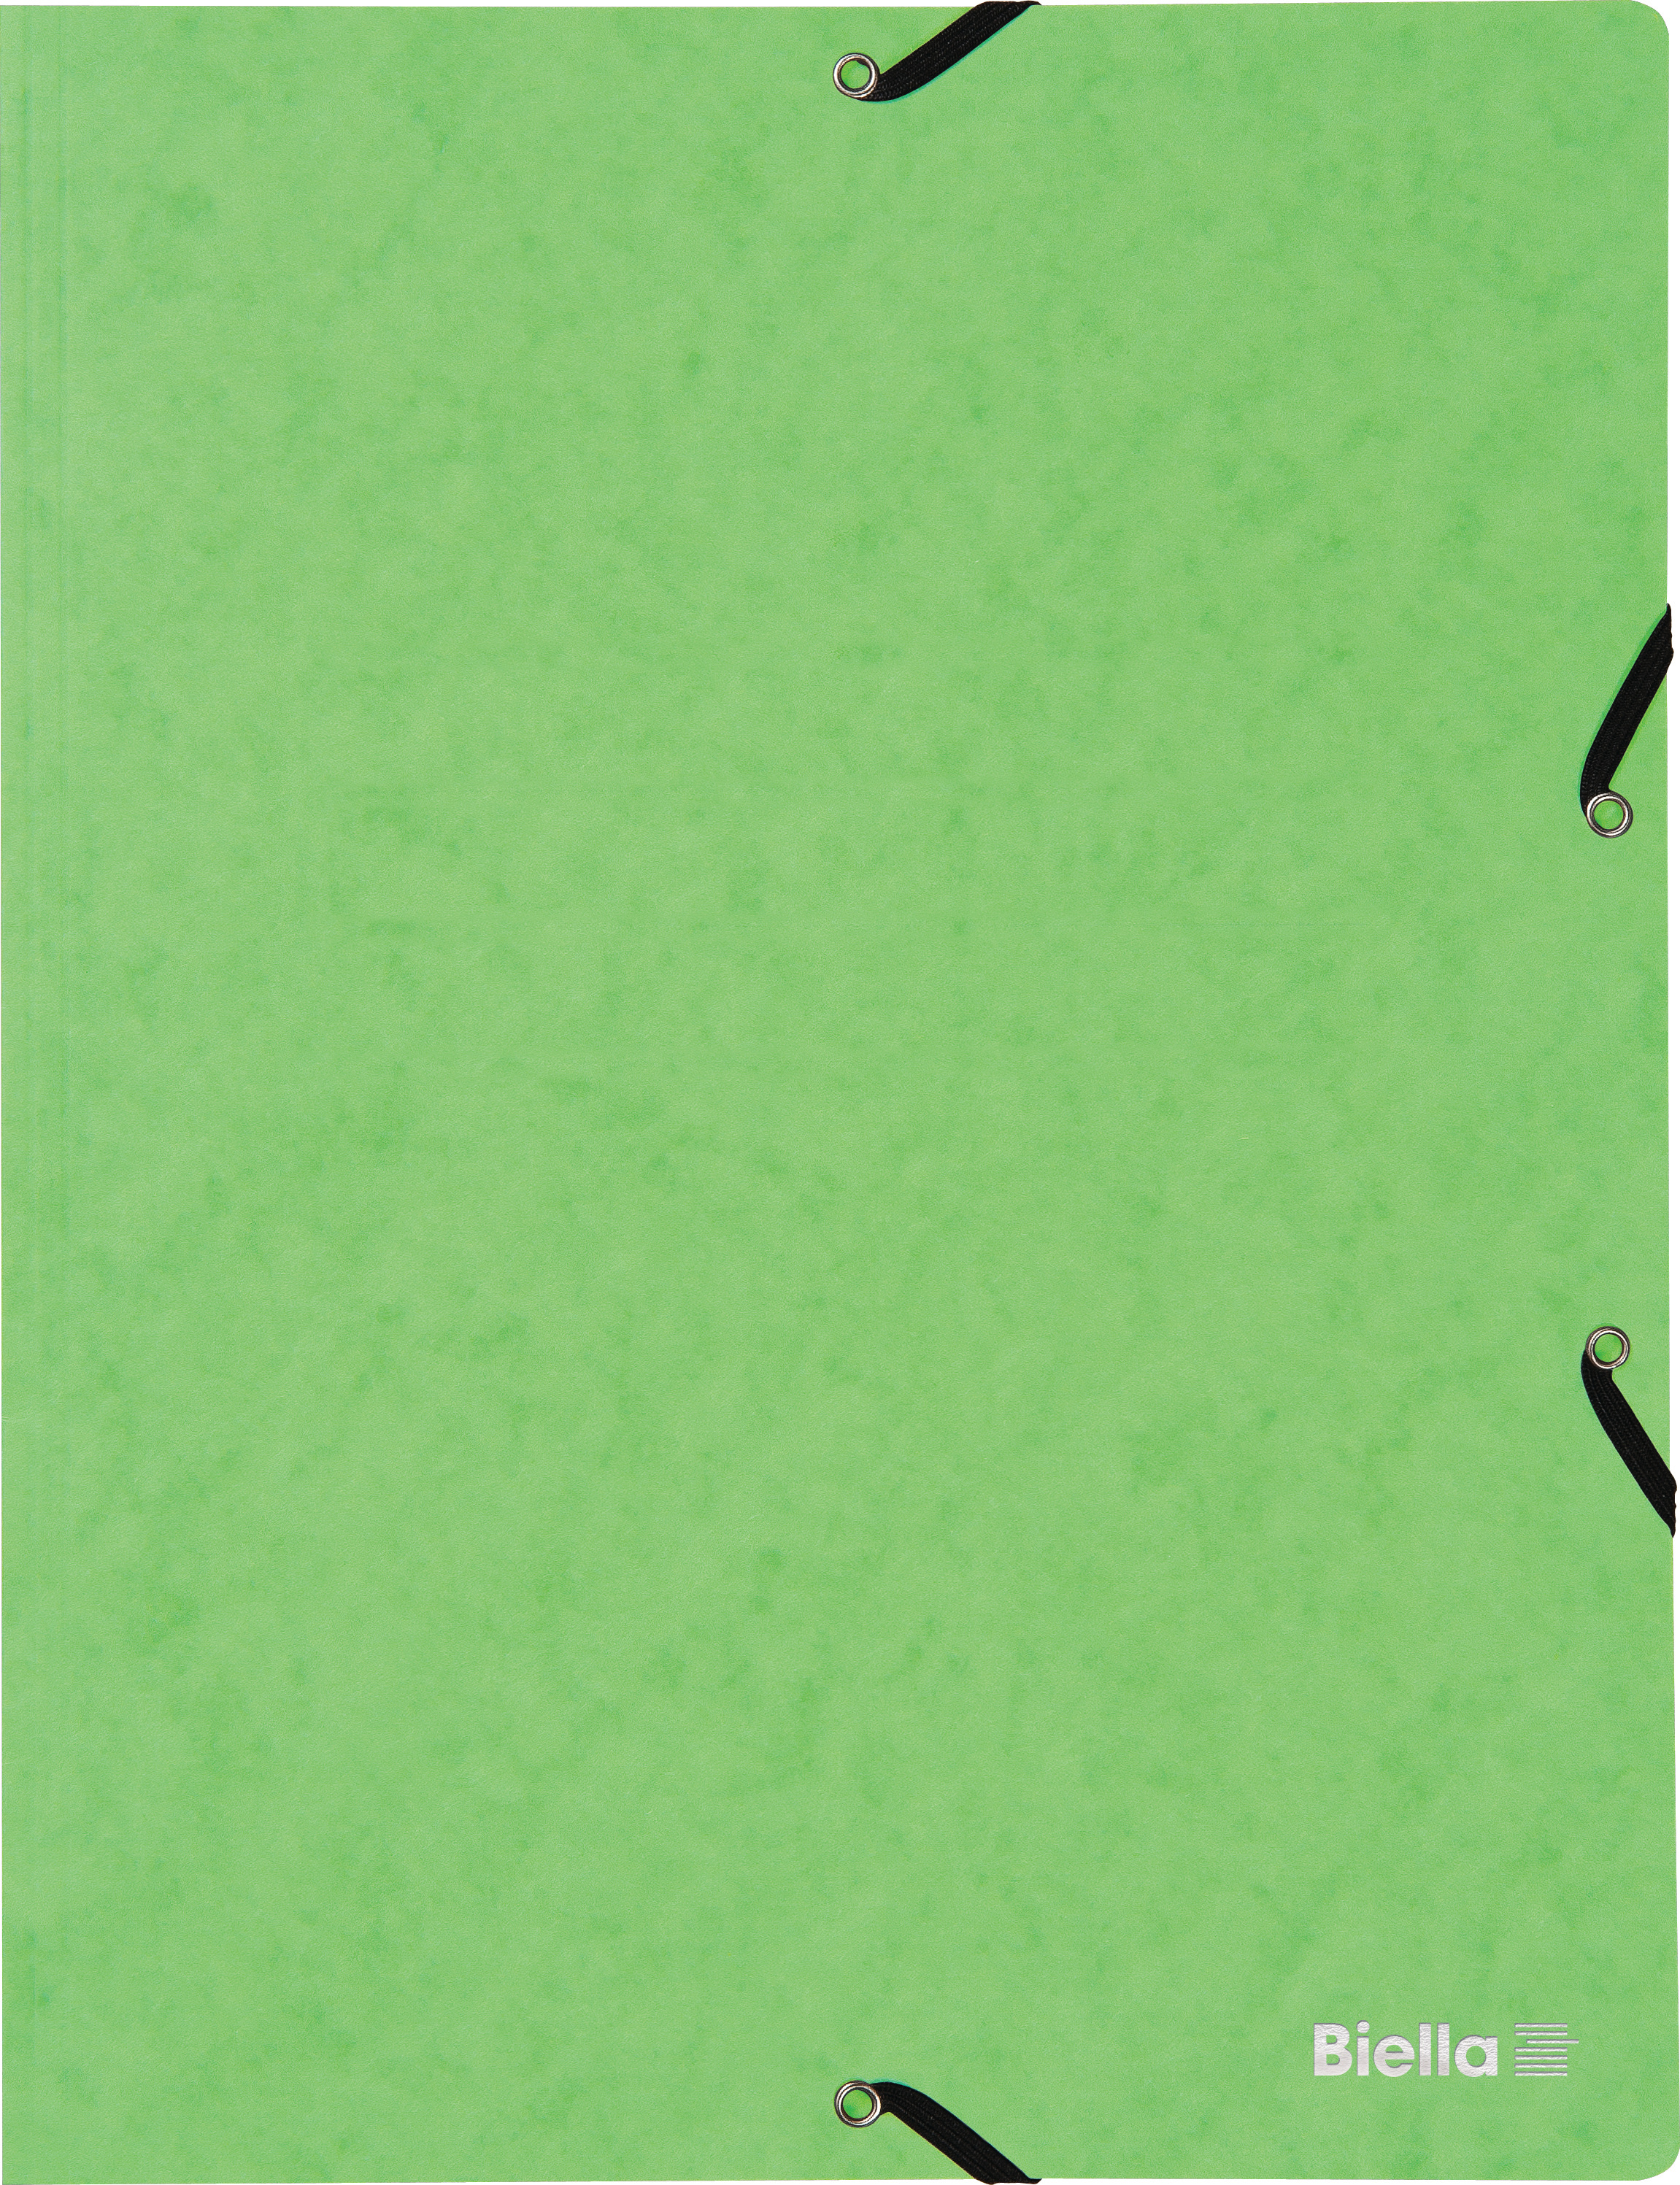 BIELLA Dossier ferm. Élastique A4 17840131U vert clair, 355gm2 200 flls.